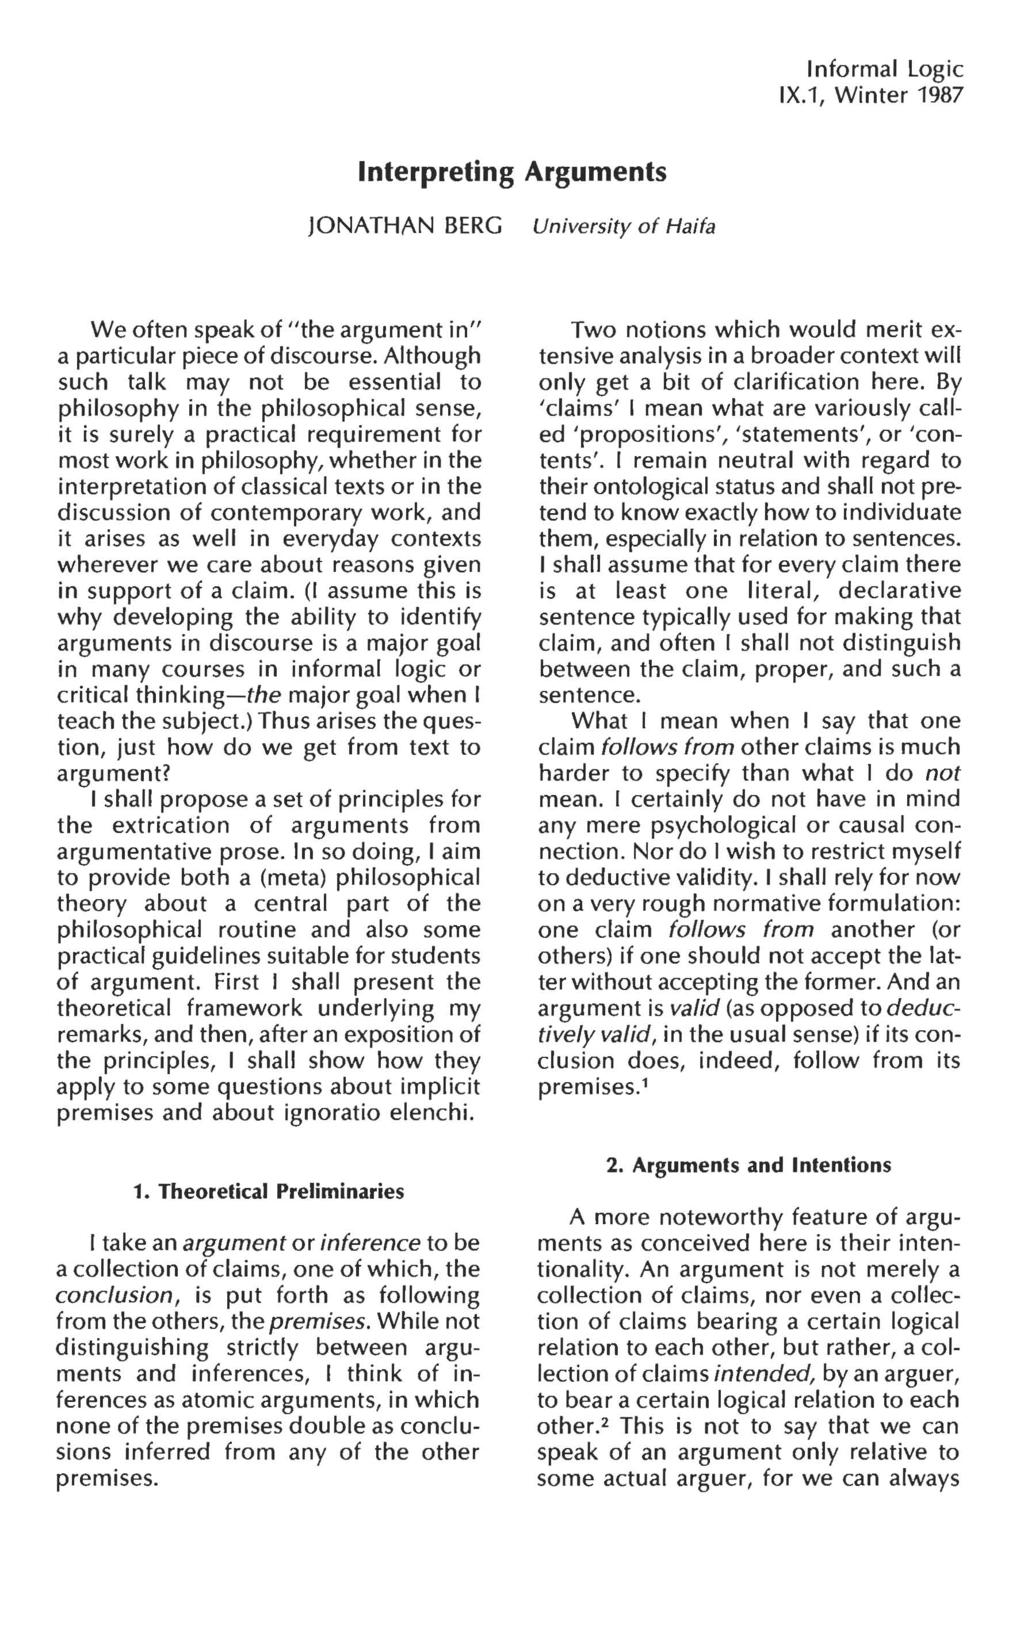 Informal Logic IX.1, Winter 1987 Interpreting Arguments JONATHAN BERG University of Haifa We often speak of "the argument in" a particular piece of discourse.